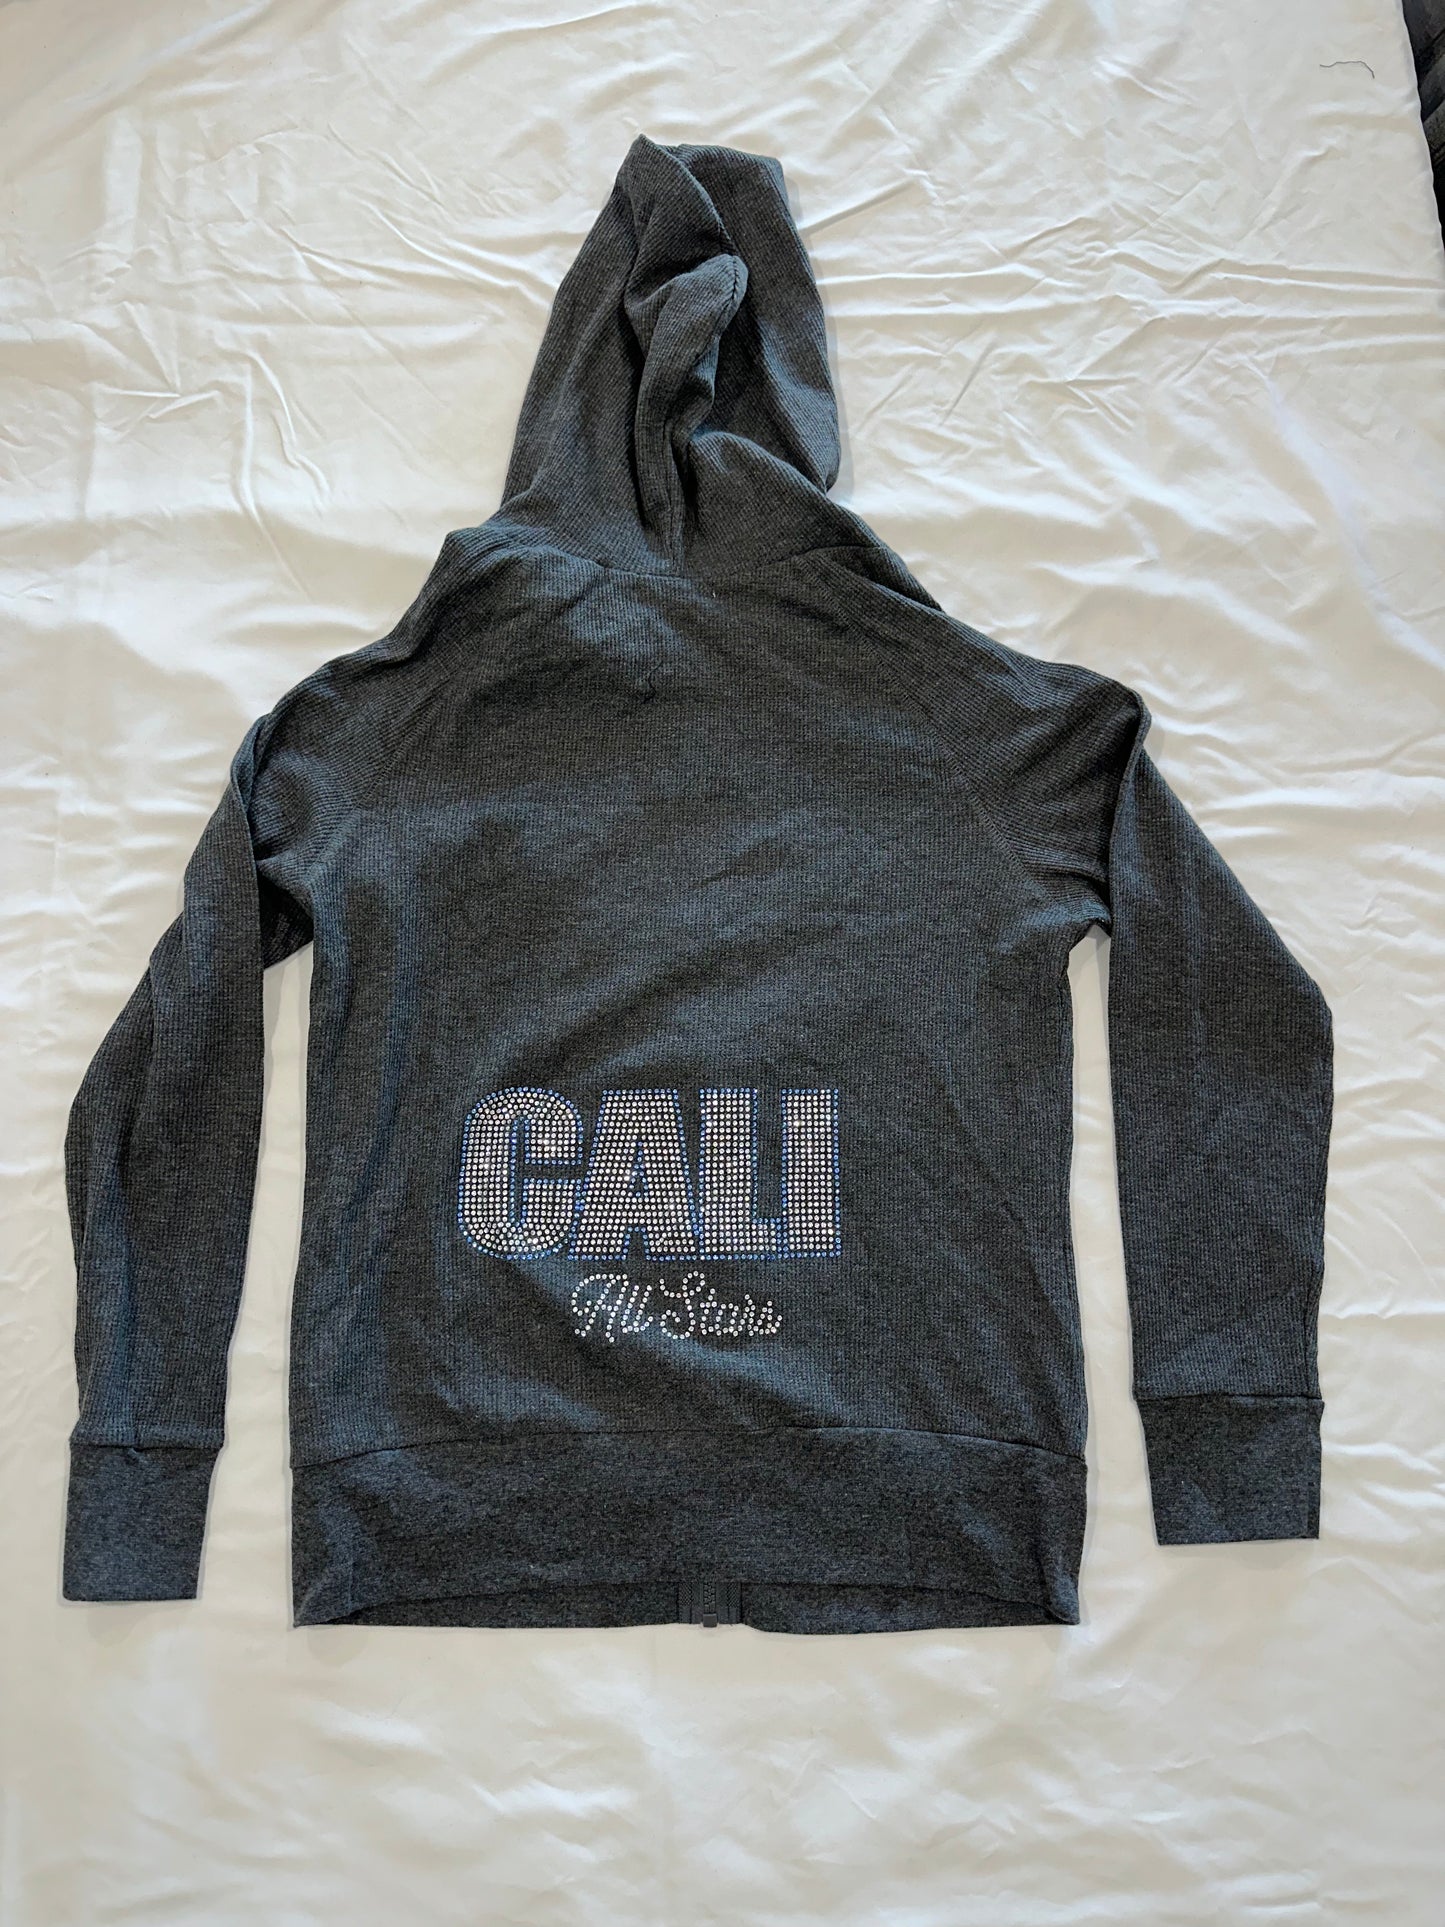 Dark Grey Thermal Zip Up Jacket Bling "CALI" Block Letter Design